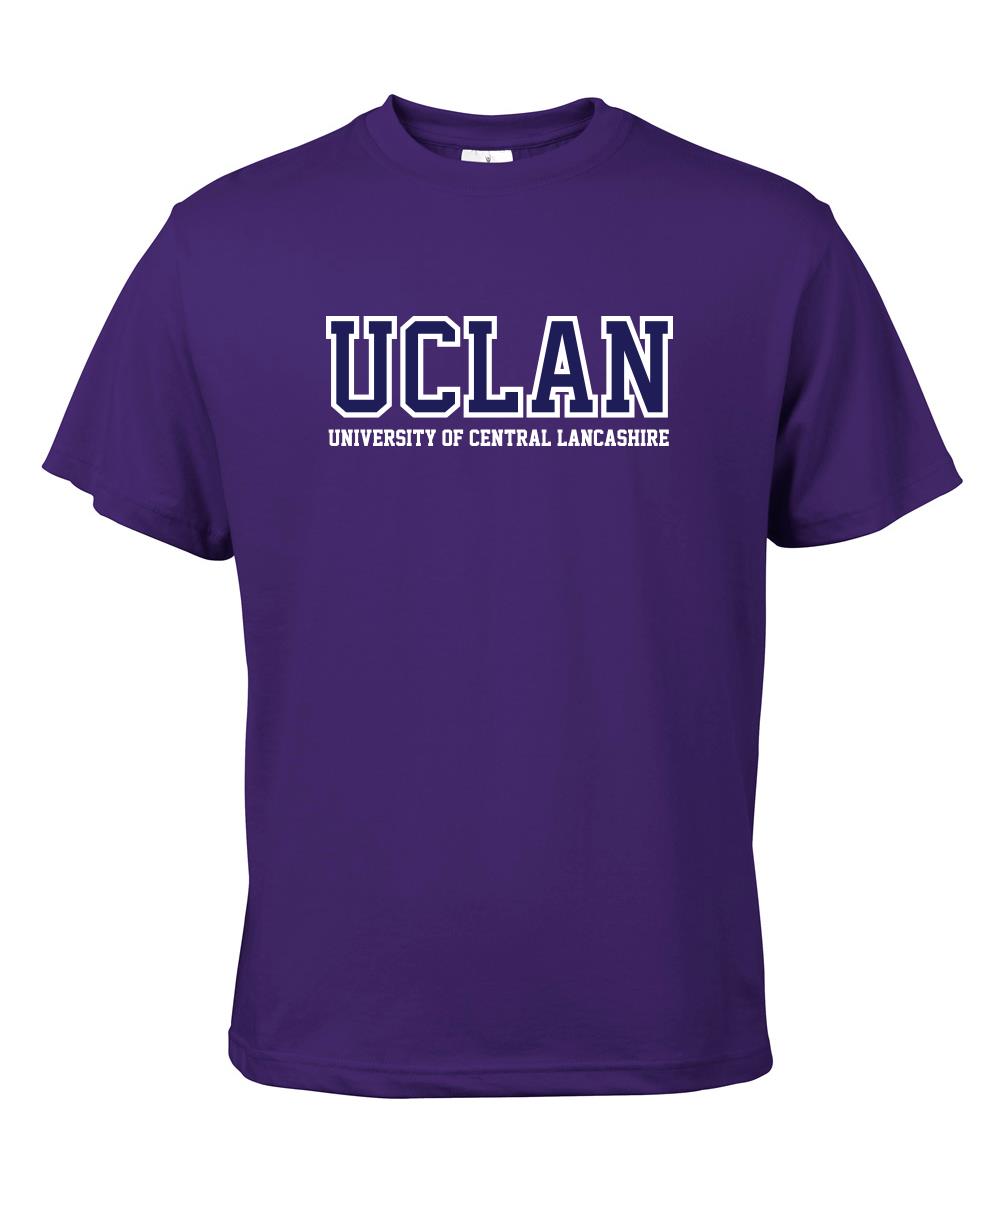 Another Purple UCLan Logo Tshirt